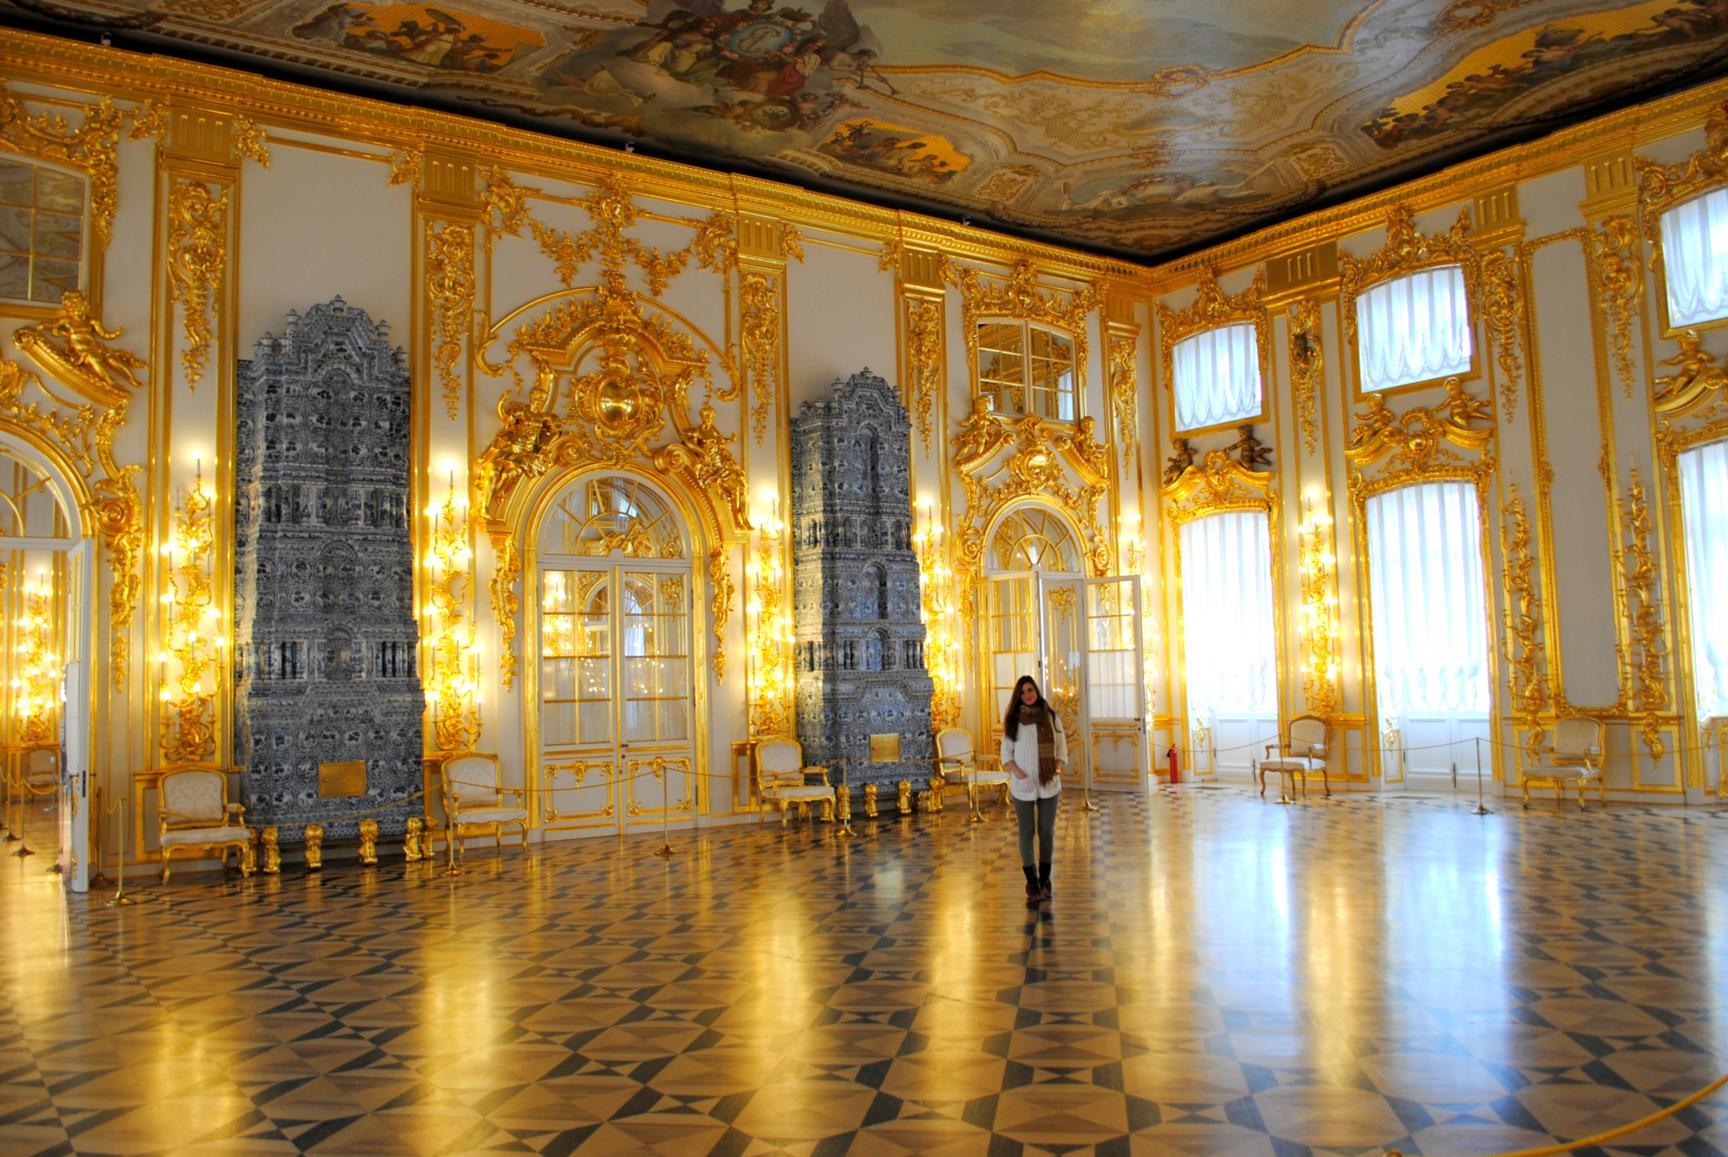 Antecámara y hornos de porcelana holandesa. Palacio de Catalina. Rusia 2015